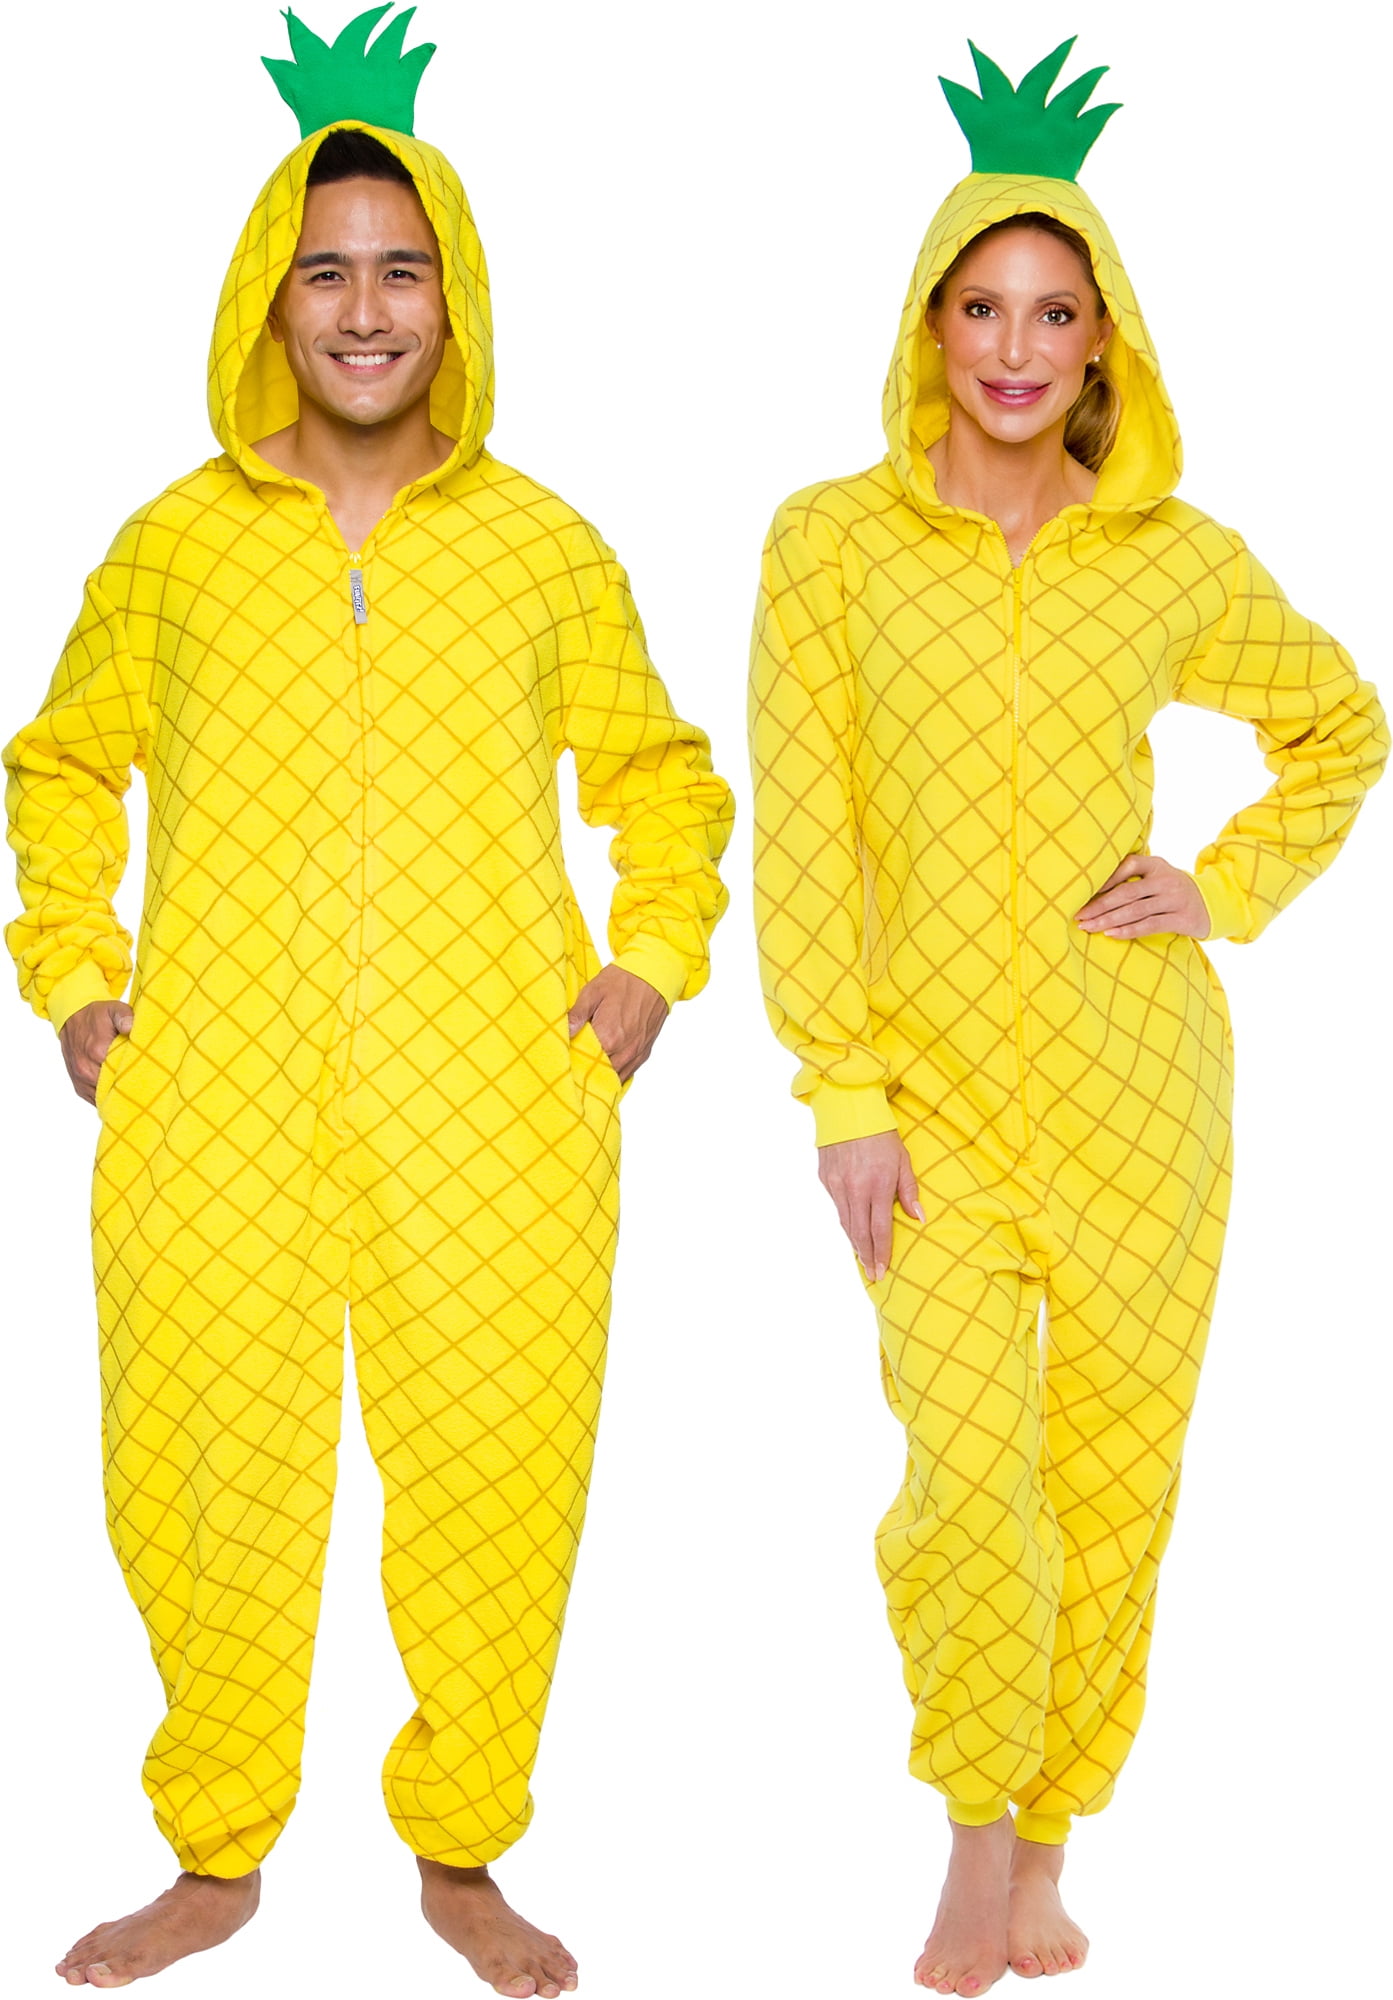 Silver Lilly Pineapple Costume - Adult Slim Onesie - Novelty Fruit (Yellow, Medium) - Walmart.com